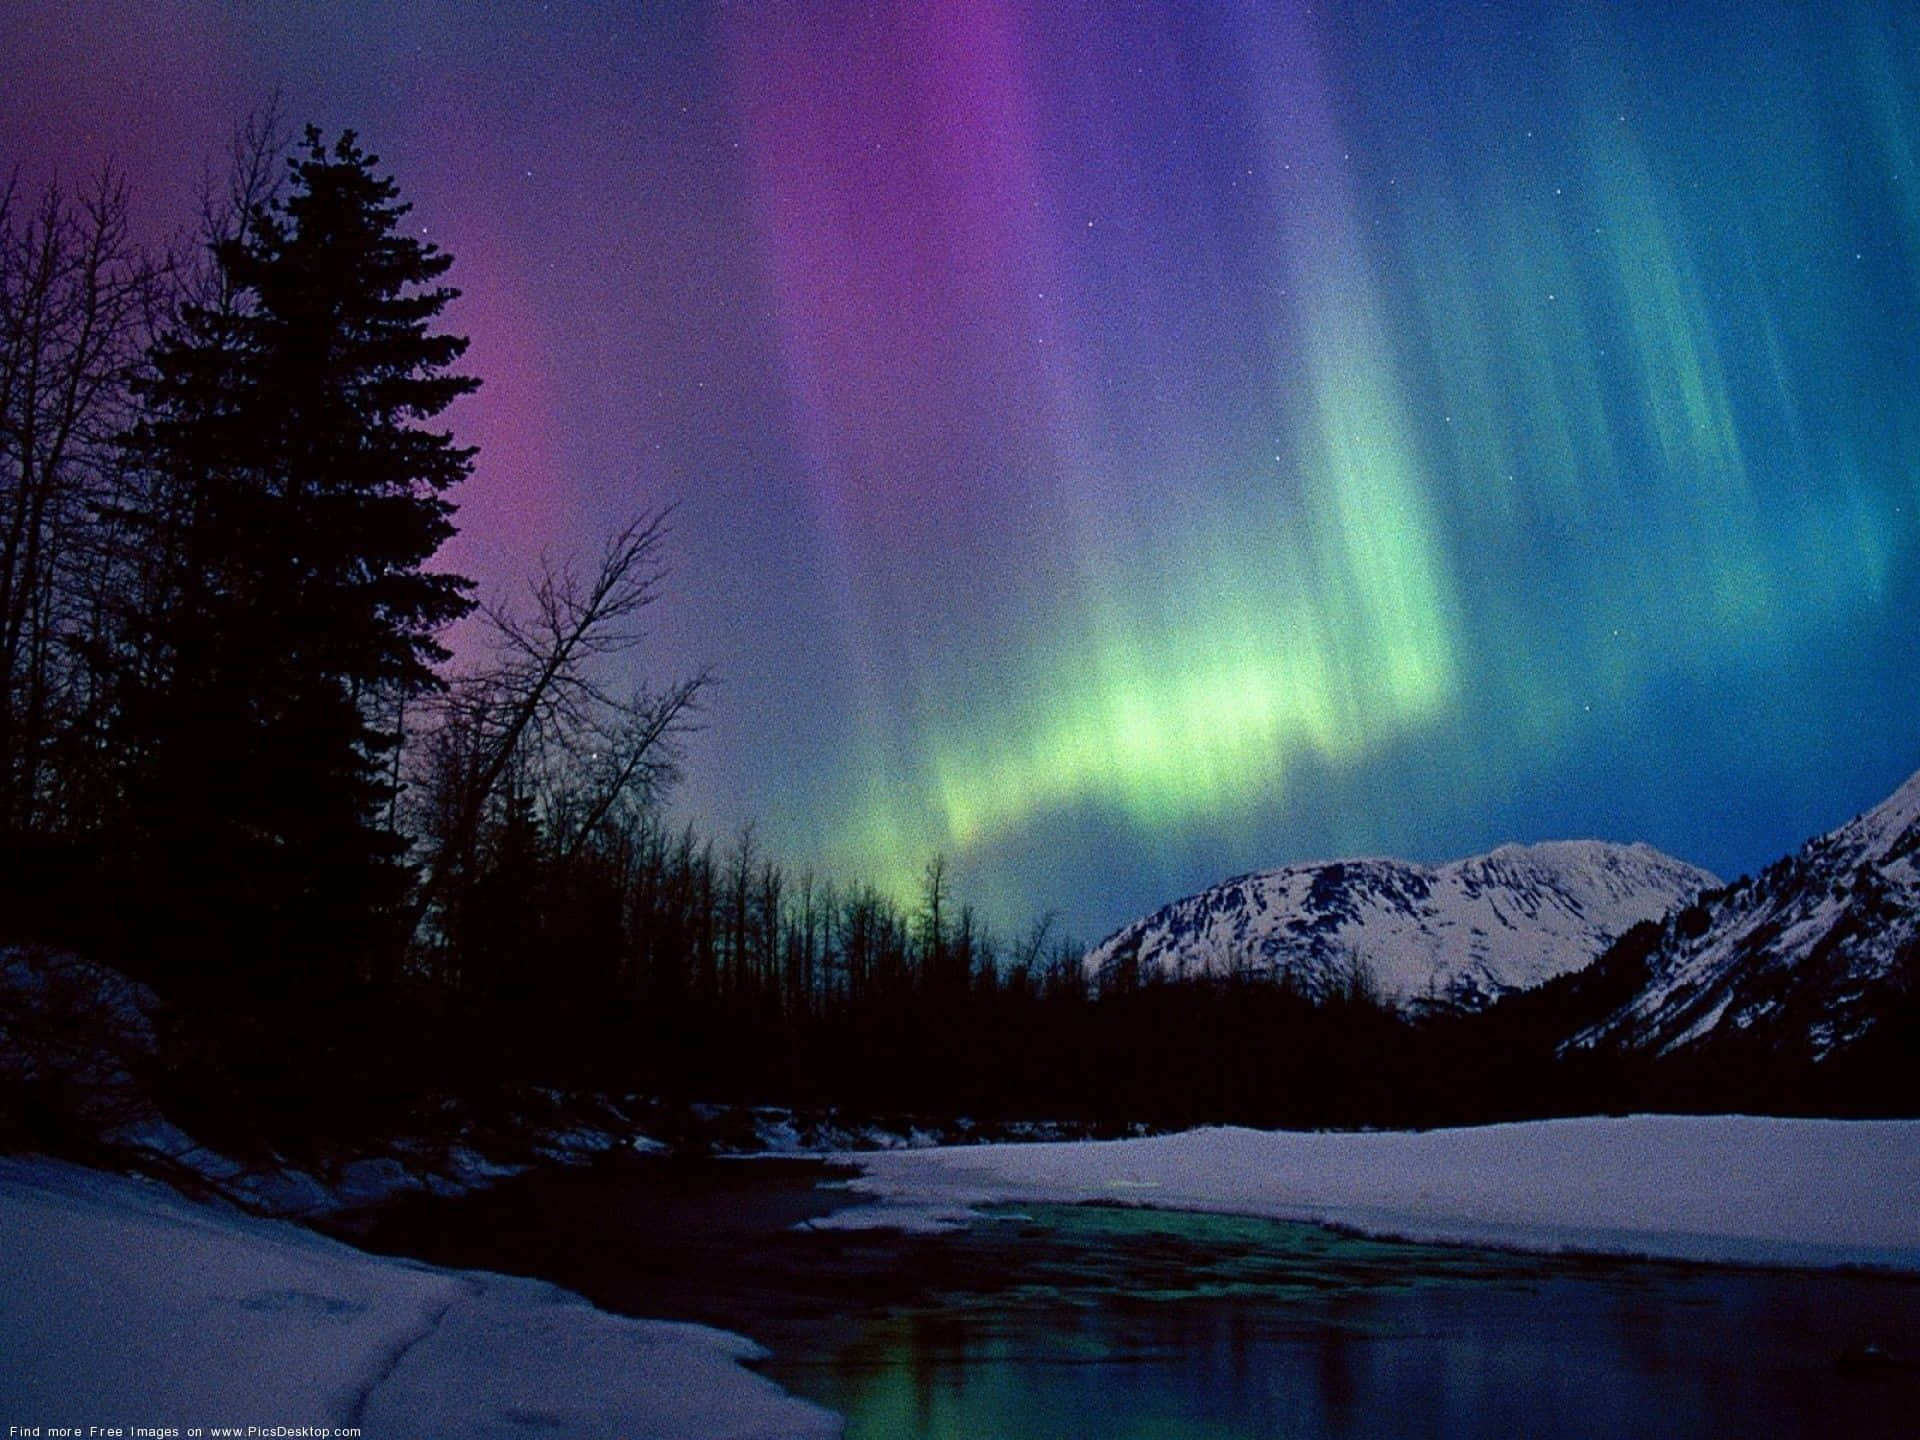 A Spectacular Aurora Borealis Illuminating the Sky